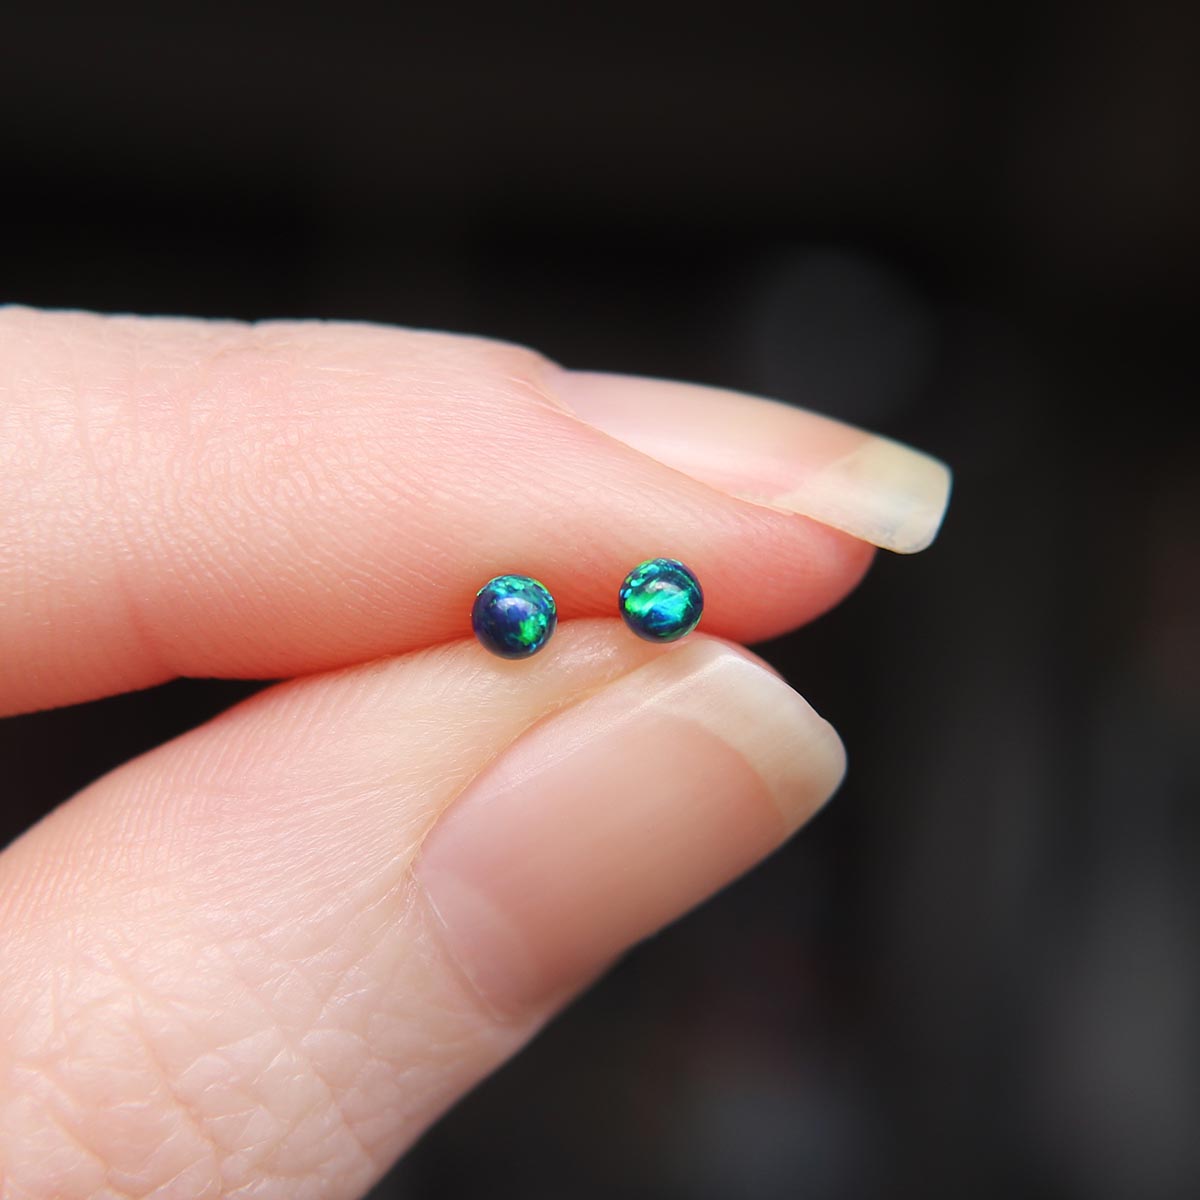 Share more than 73 blue green opal earrings super hot